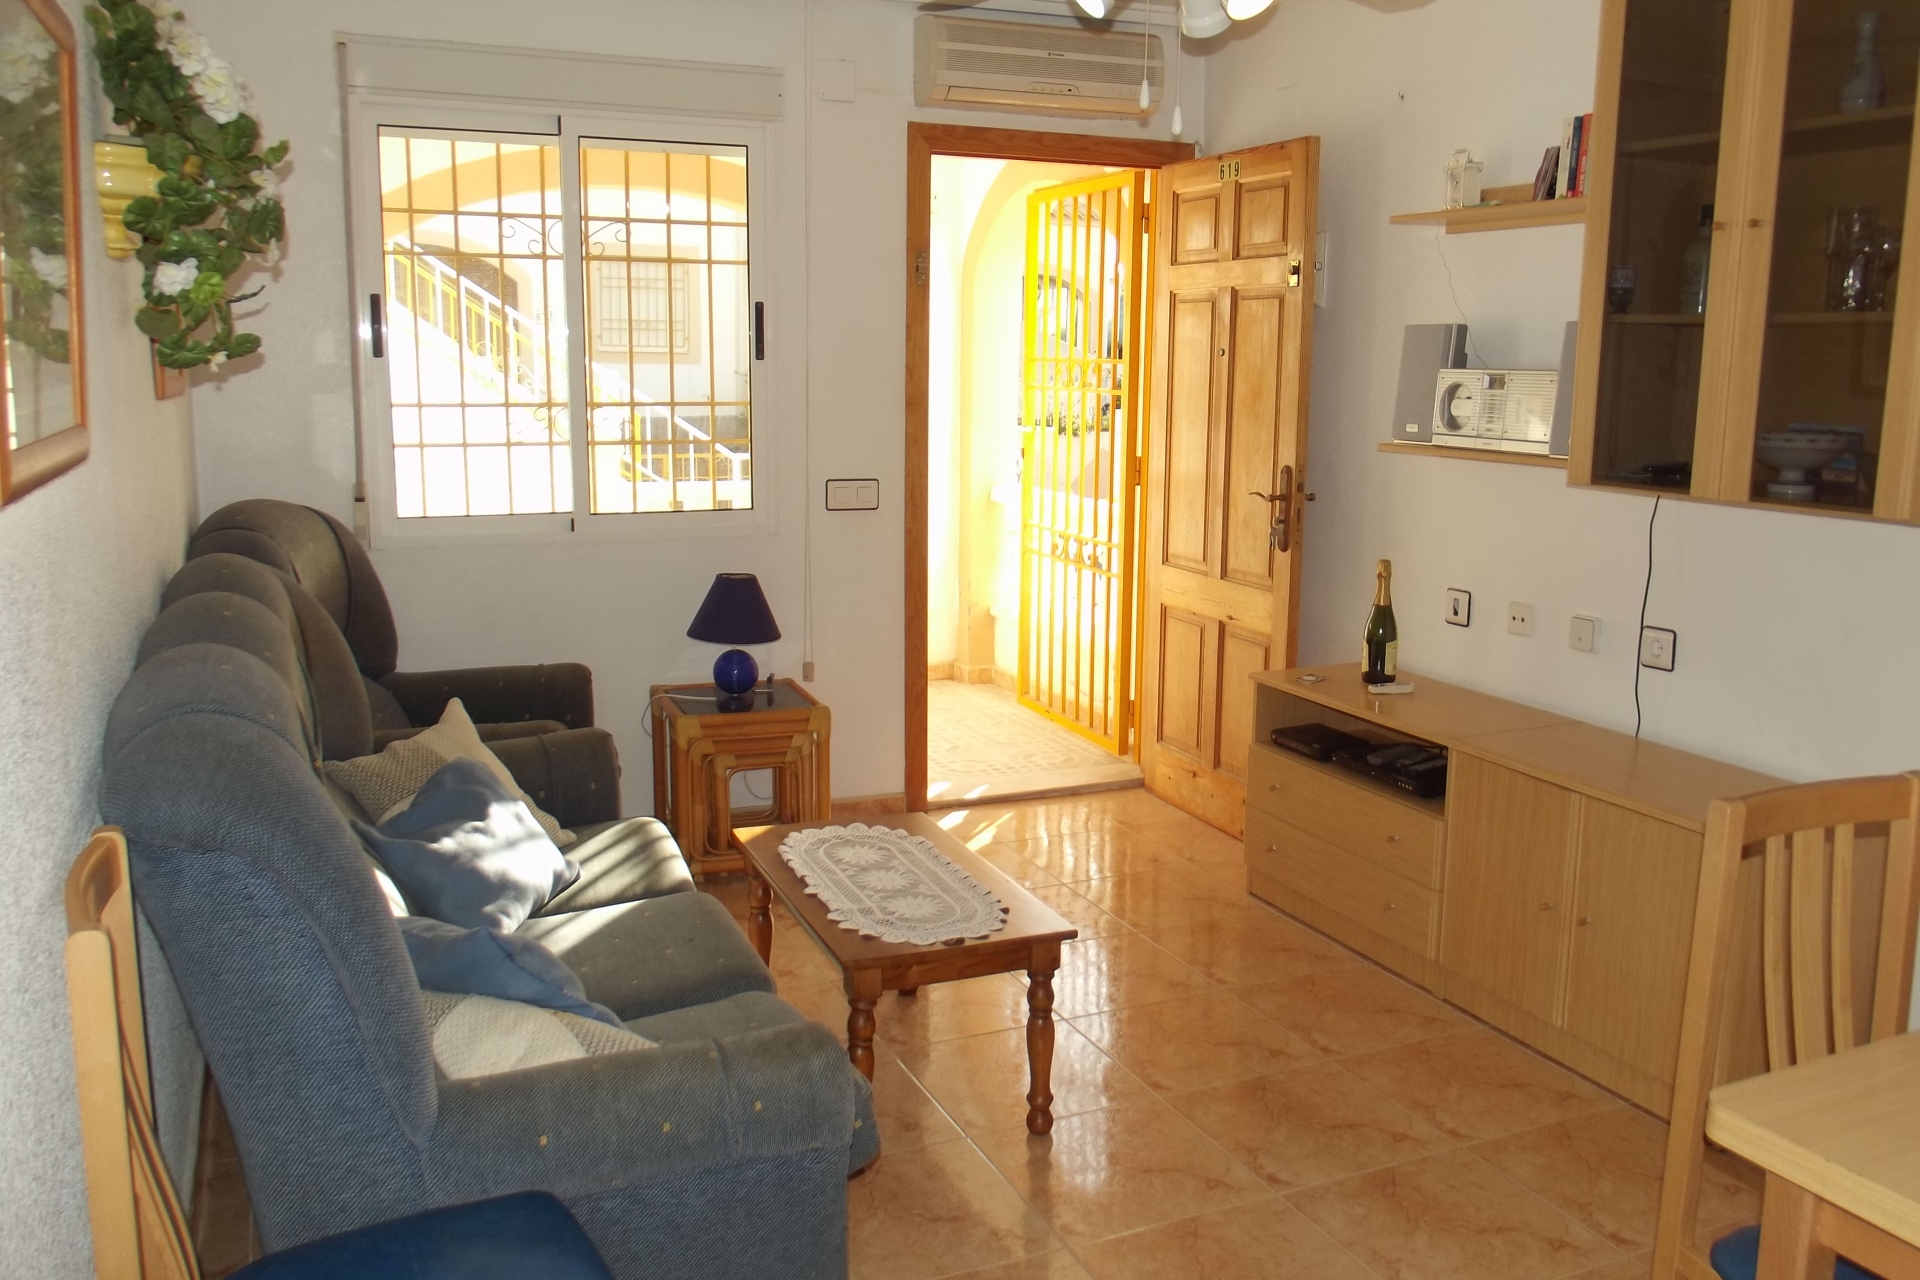 Property Sold - Bungalow for sale - Torrevieja - Altos del Limonar